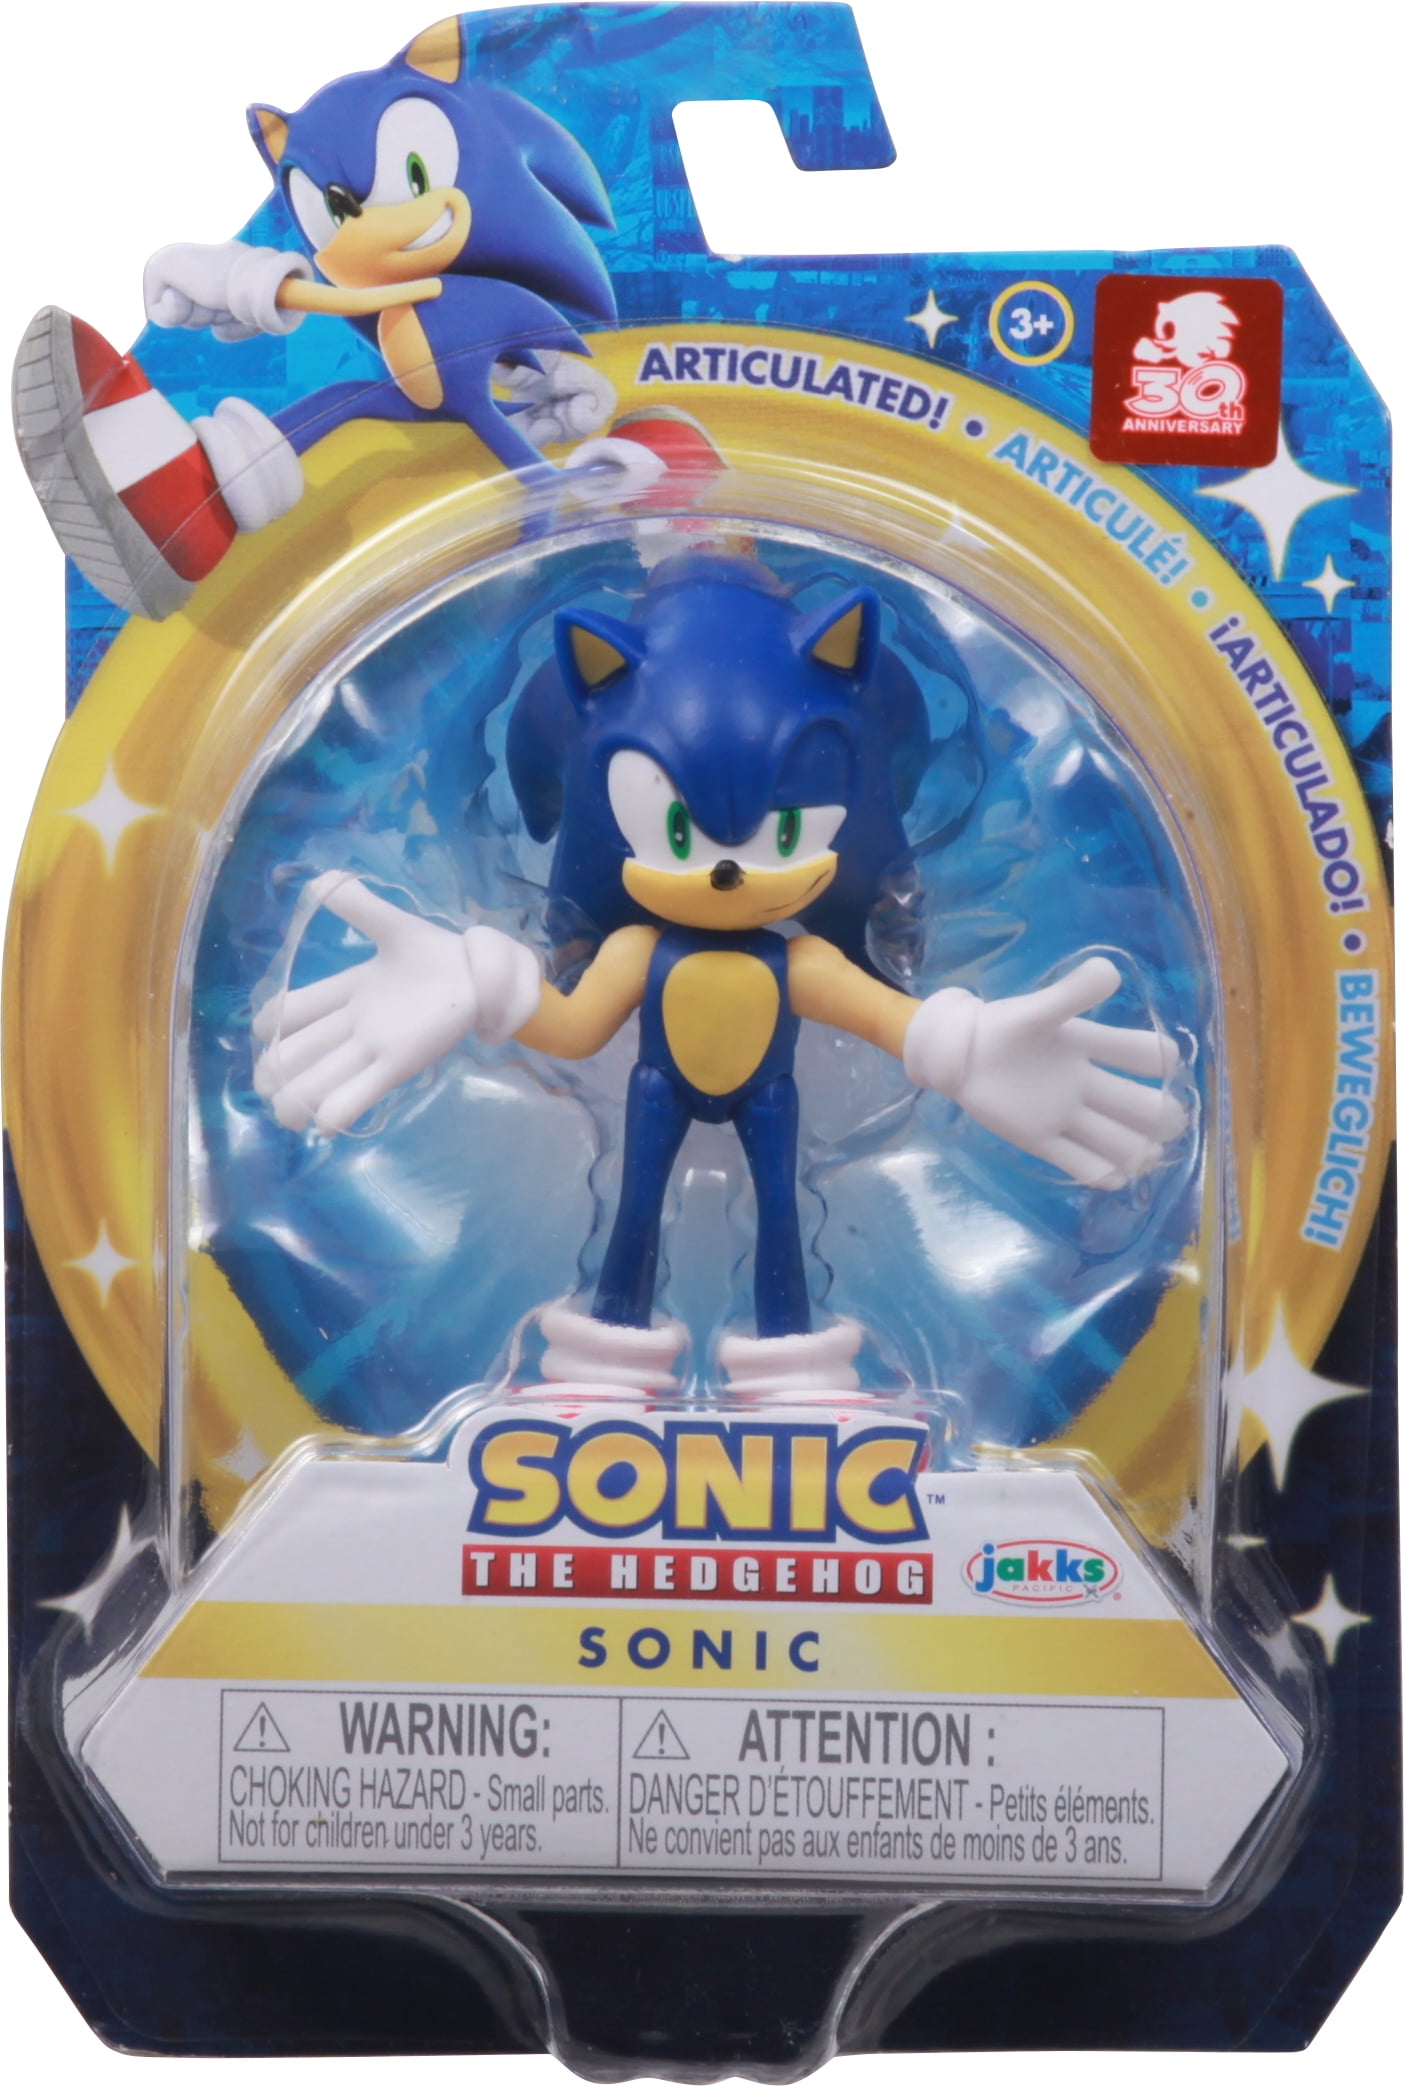 Sonic Prime 2.5 figures wave 1 : r/JakksPacificSonic